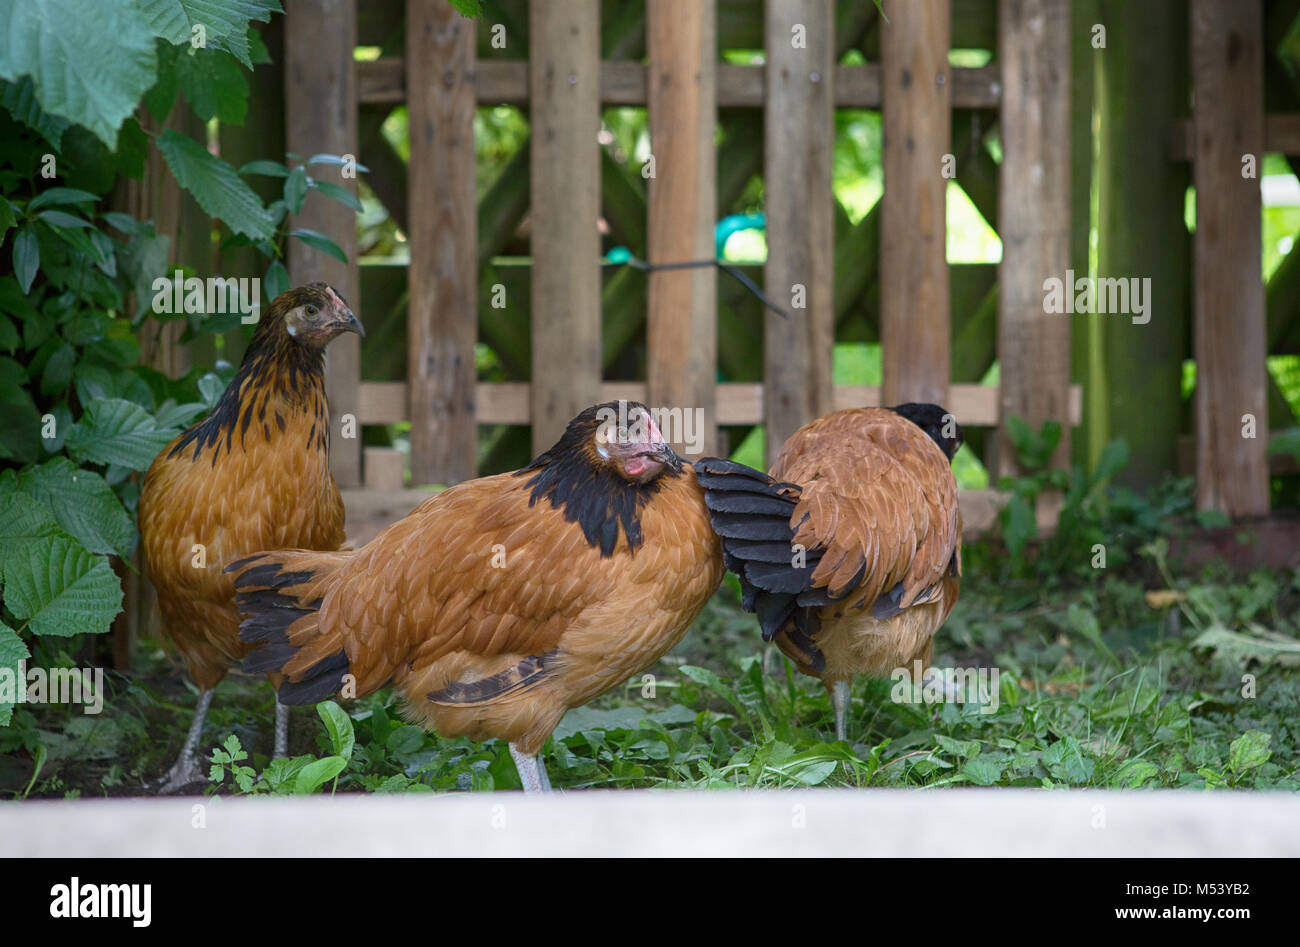 chicken Stock Photo